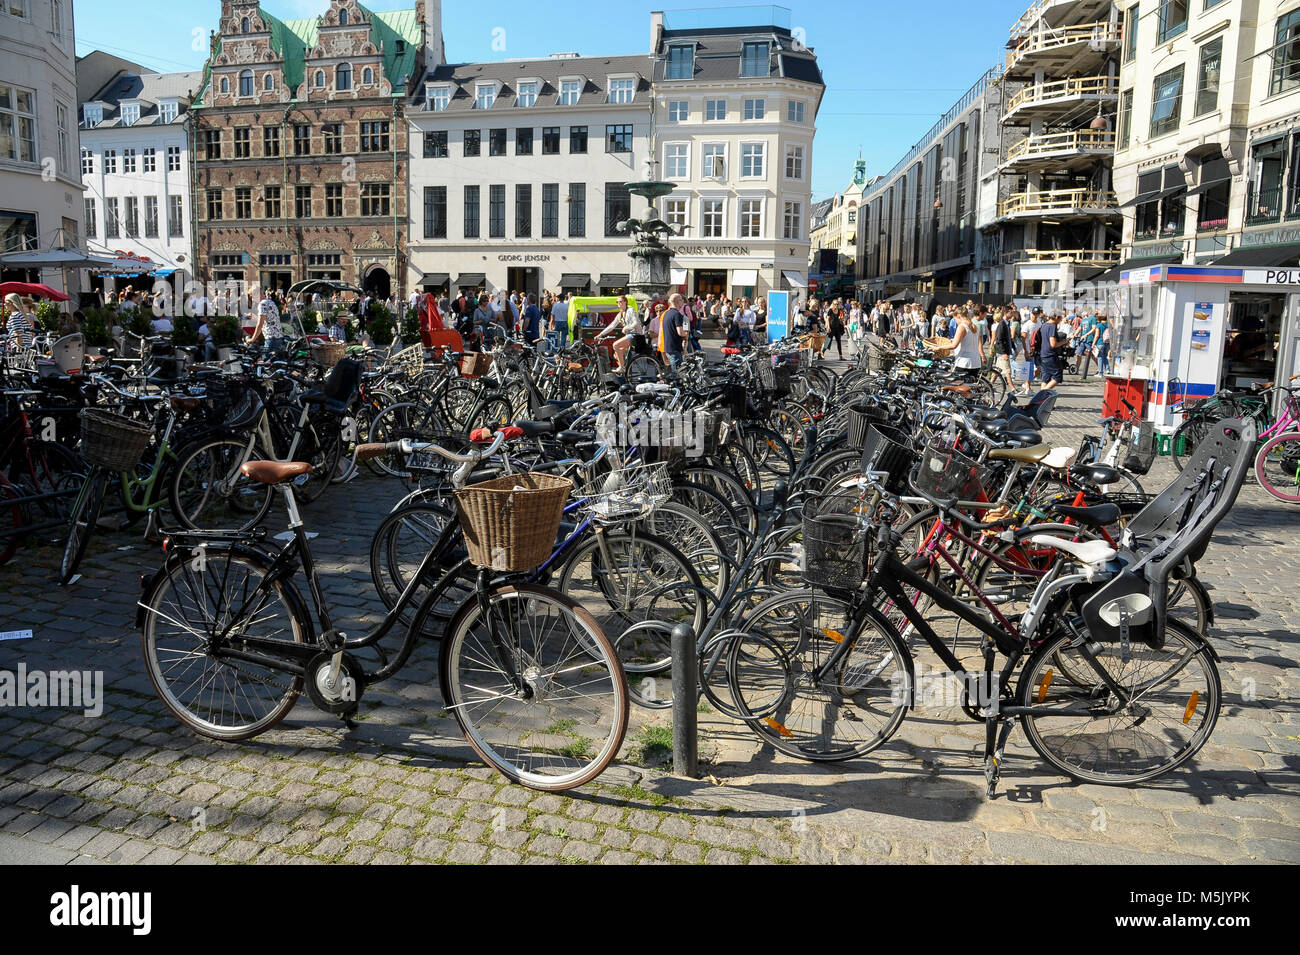 Bicycle parking on Højbro Plads (High Bridge Square) centre of Copenhagen, Denmark. August 6th 2015 © Wojciech Strozyk / Alamy Stock Photo Stock Photo